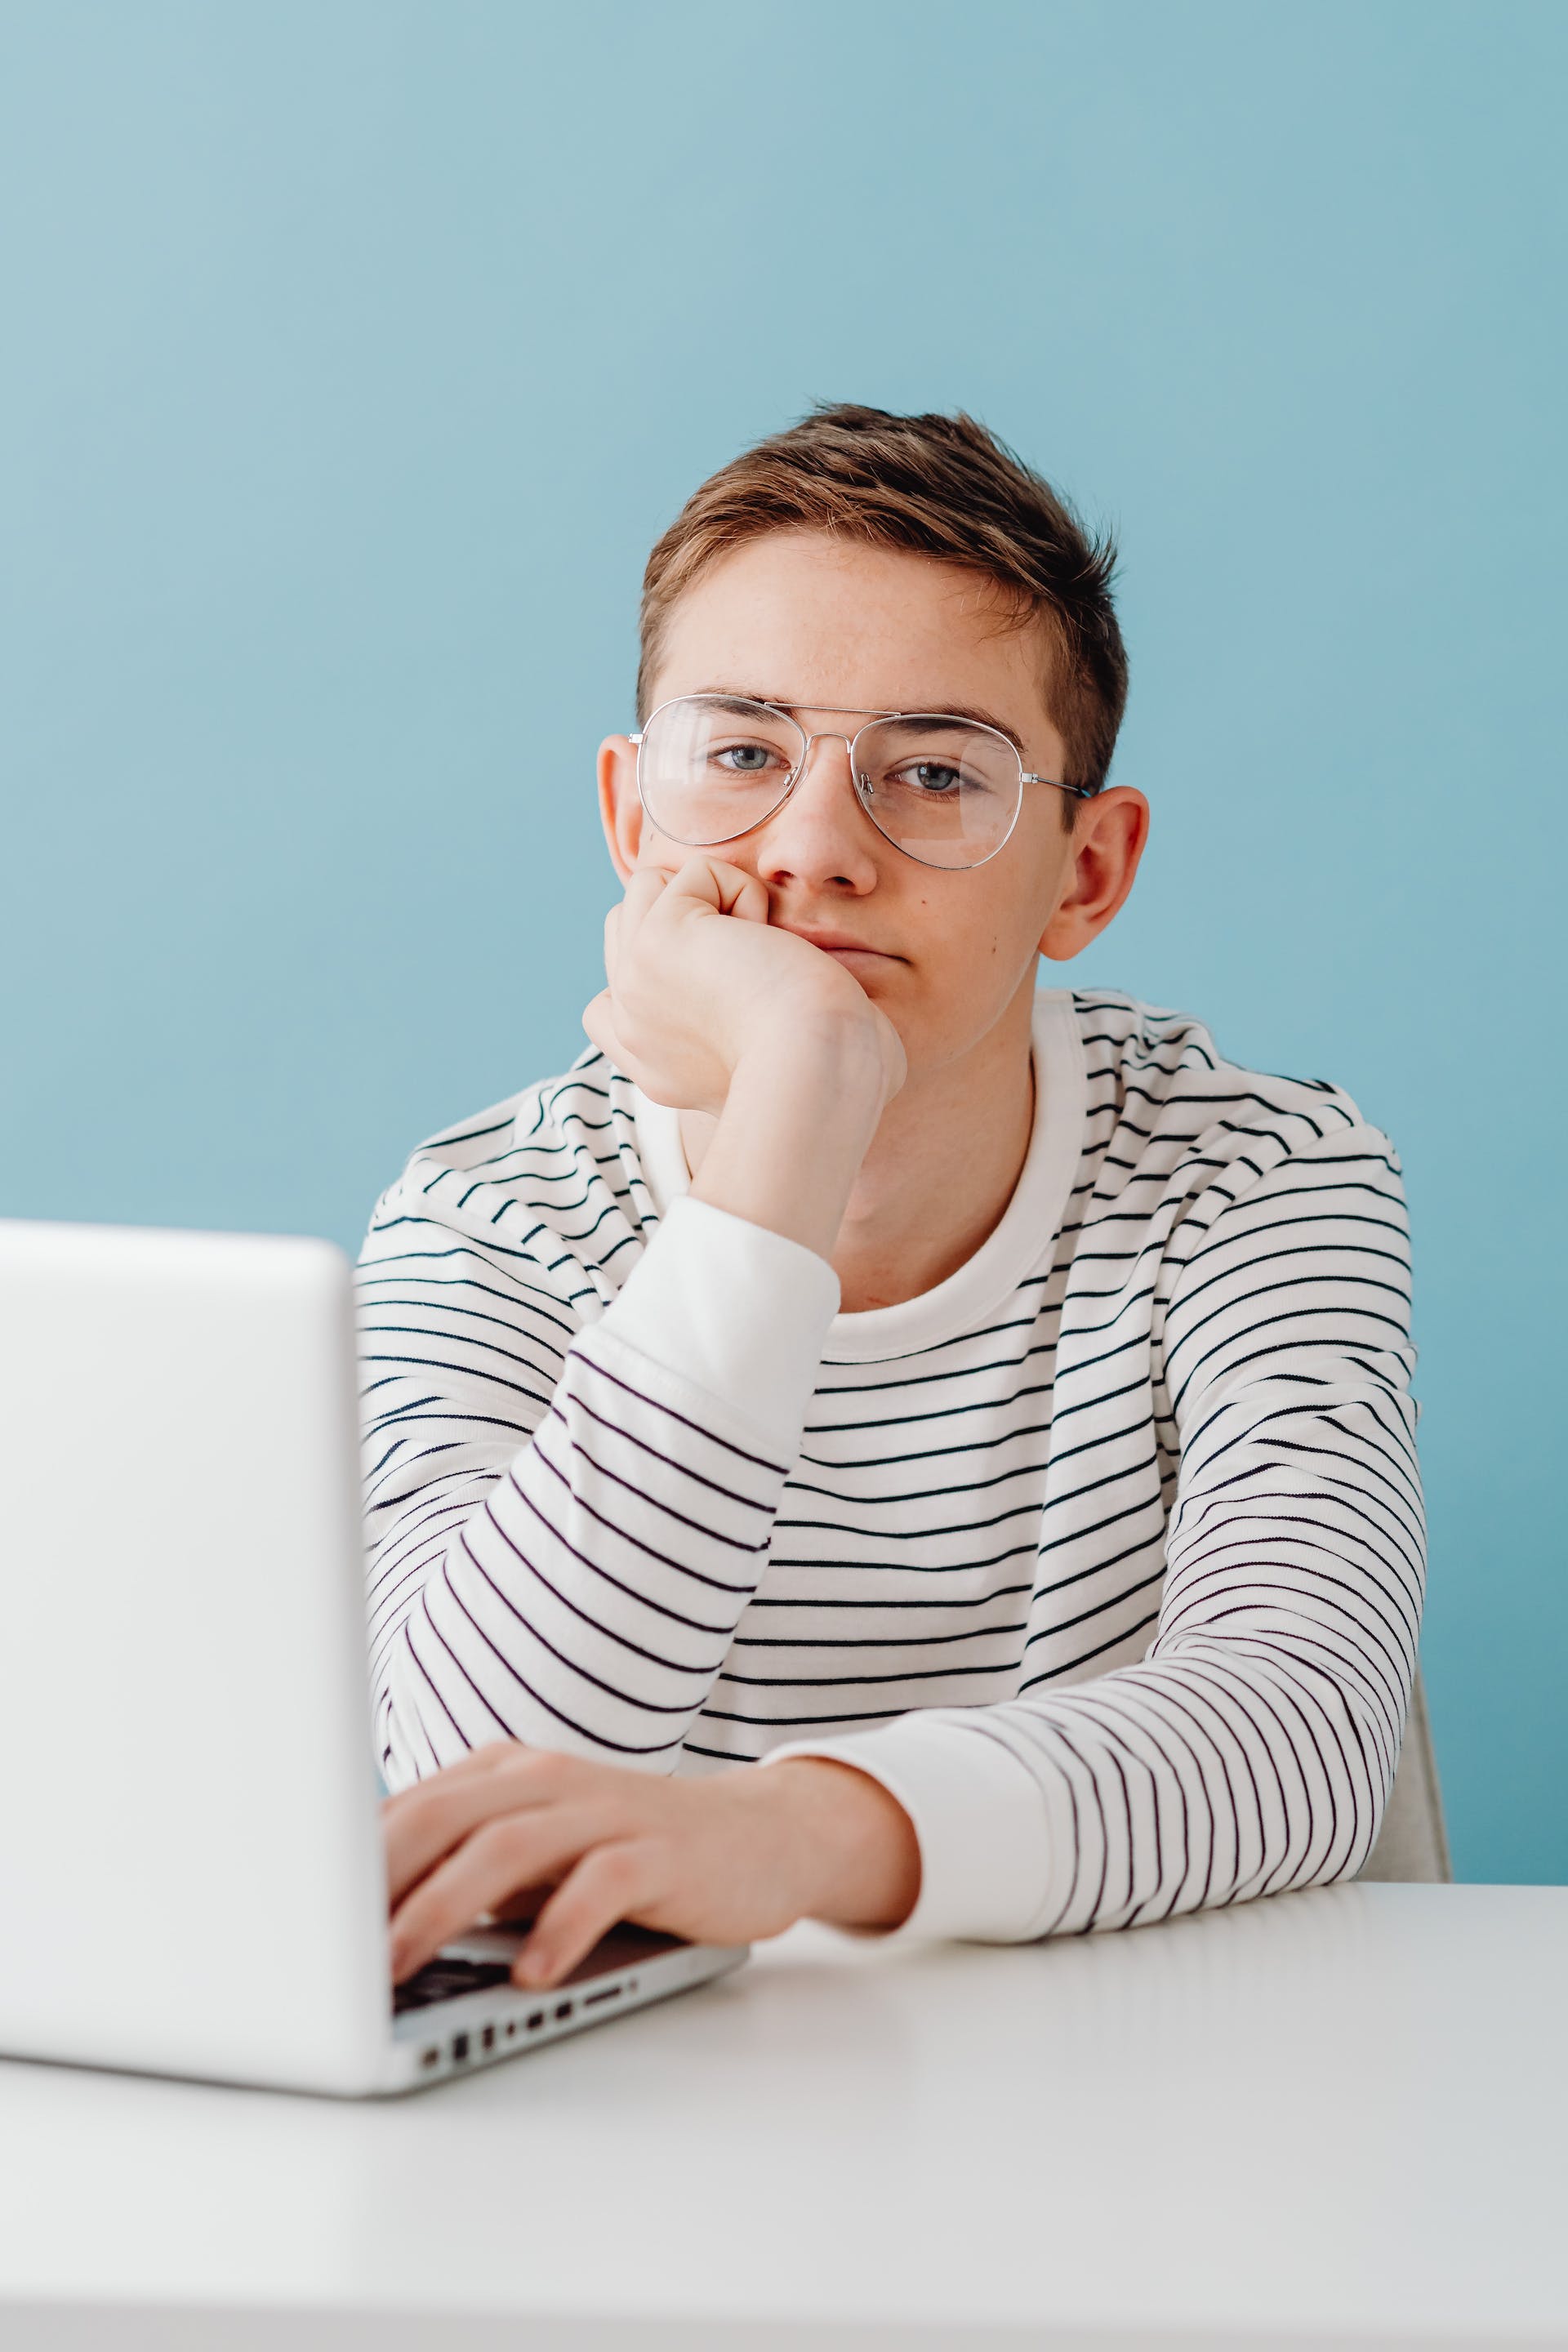 Teenage boy sitting with laptop | Source: Pexels